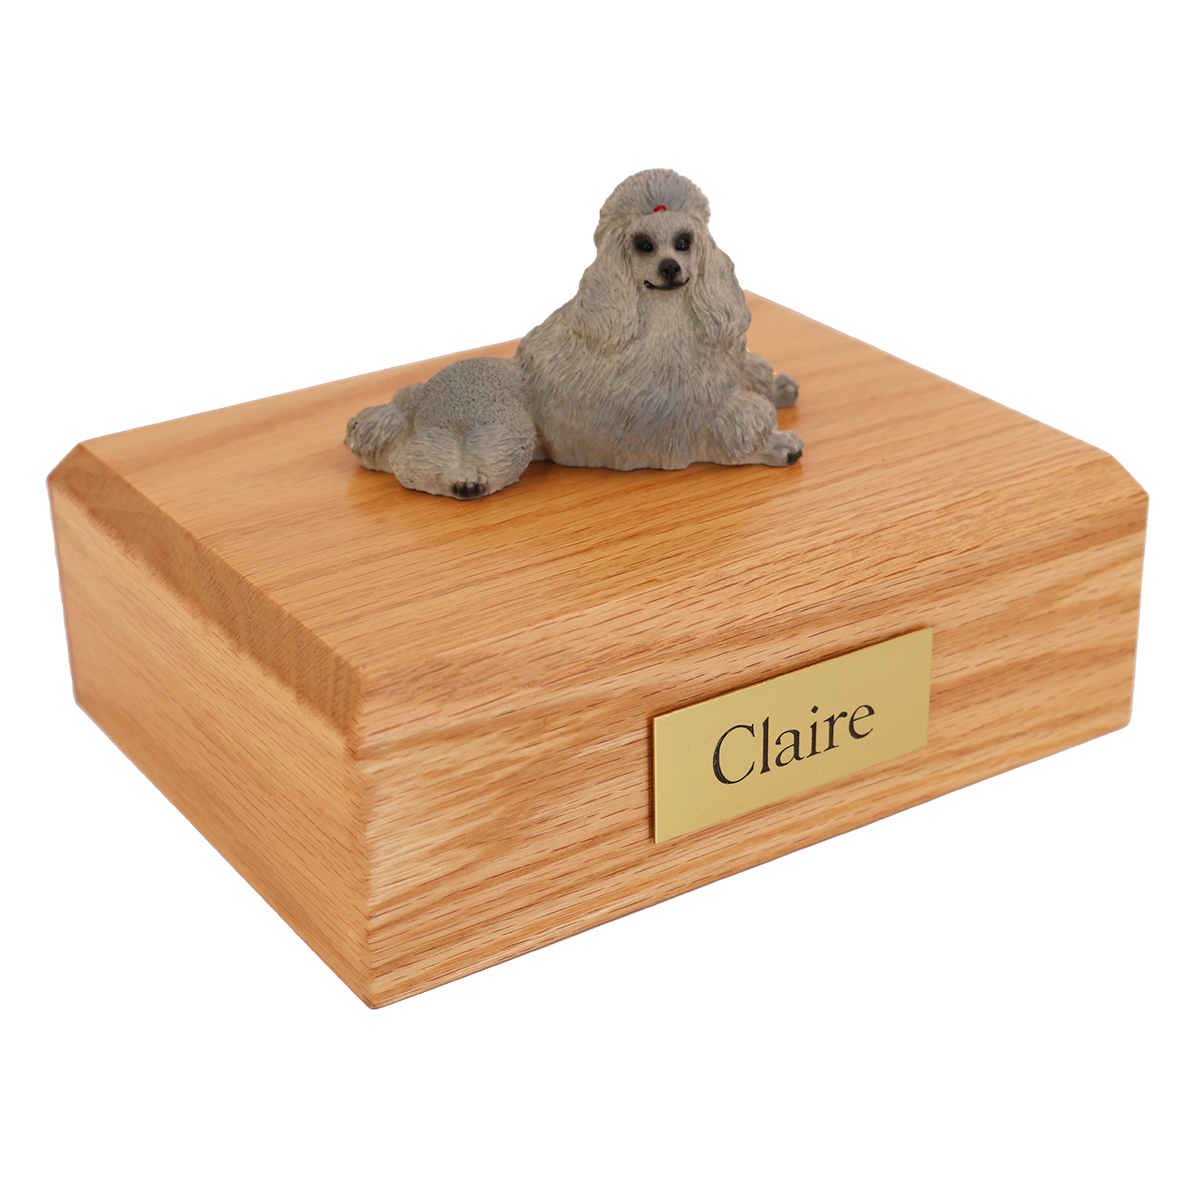 Dog, Poodle, Gray - show cut - Figurine Urn